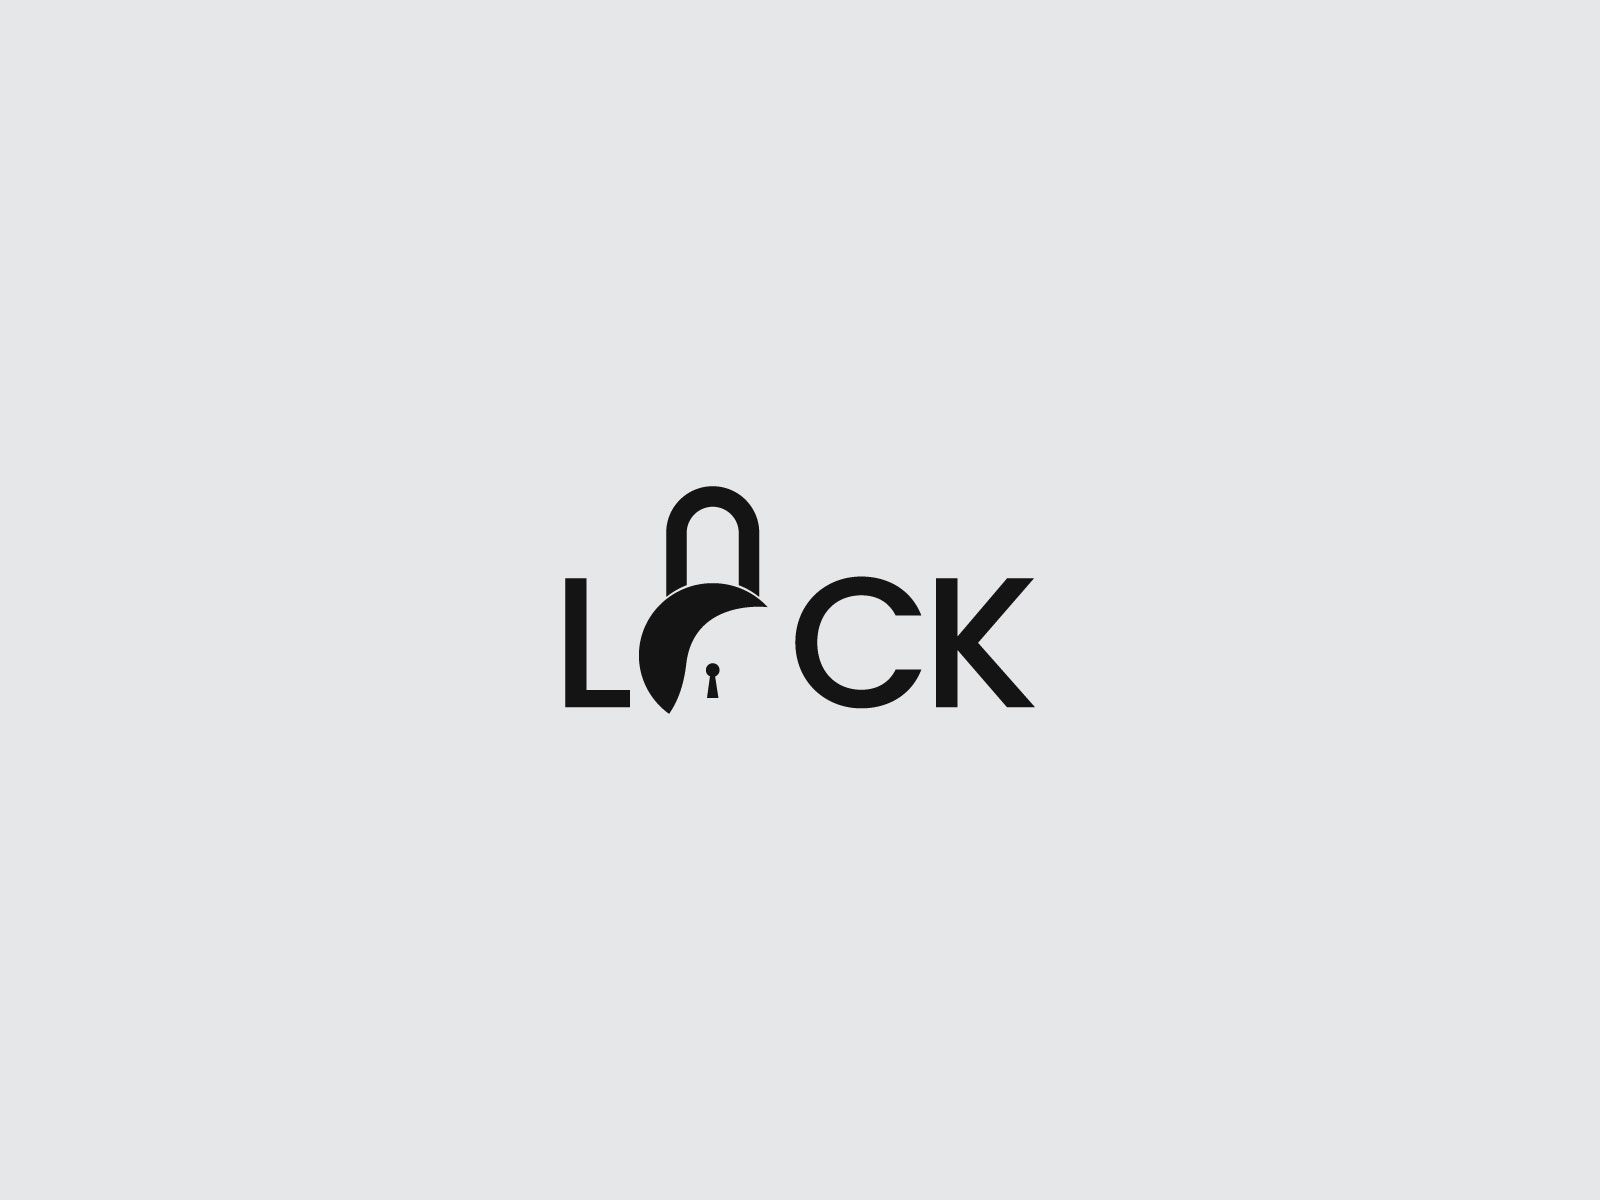 Lock Logo Design by Habib Sujon on Dribbble